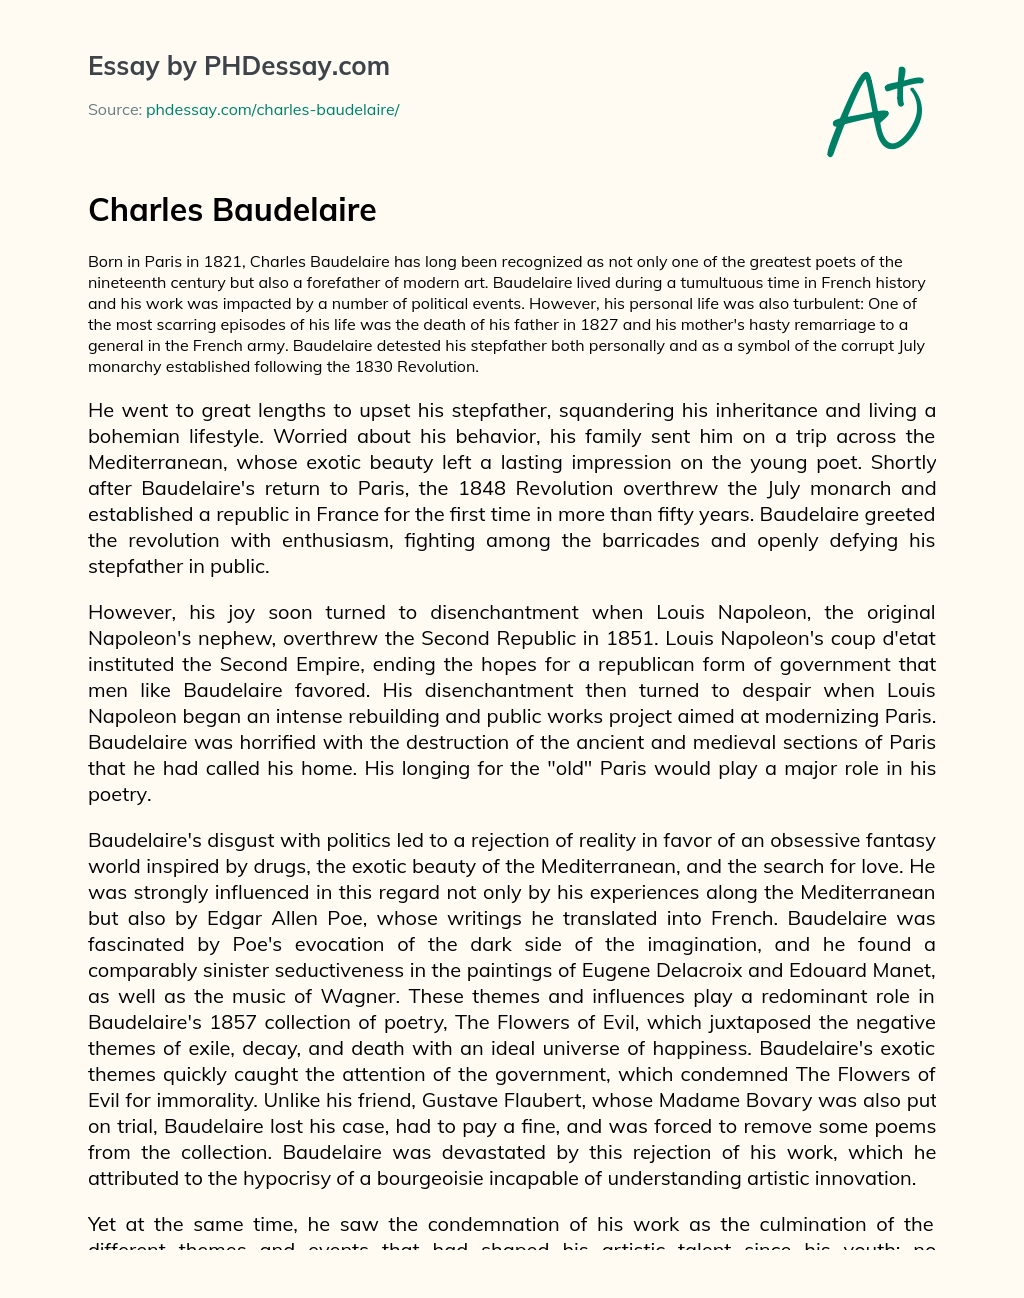 Charles Baudelaire essay